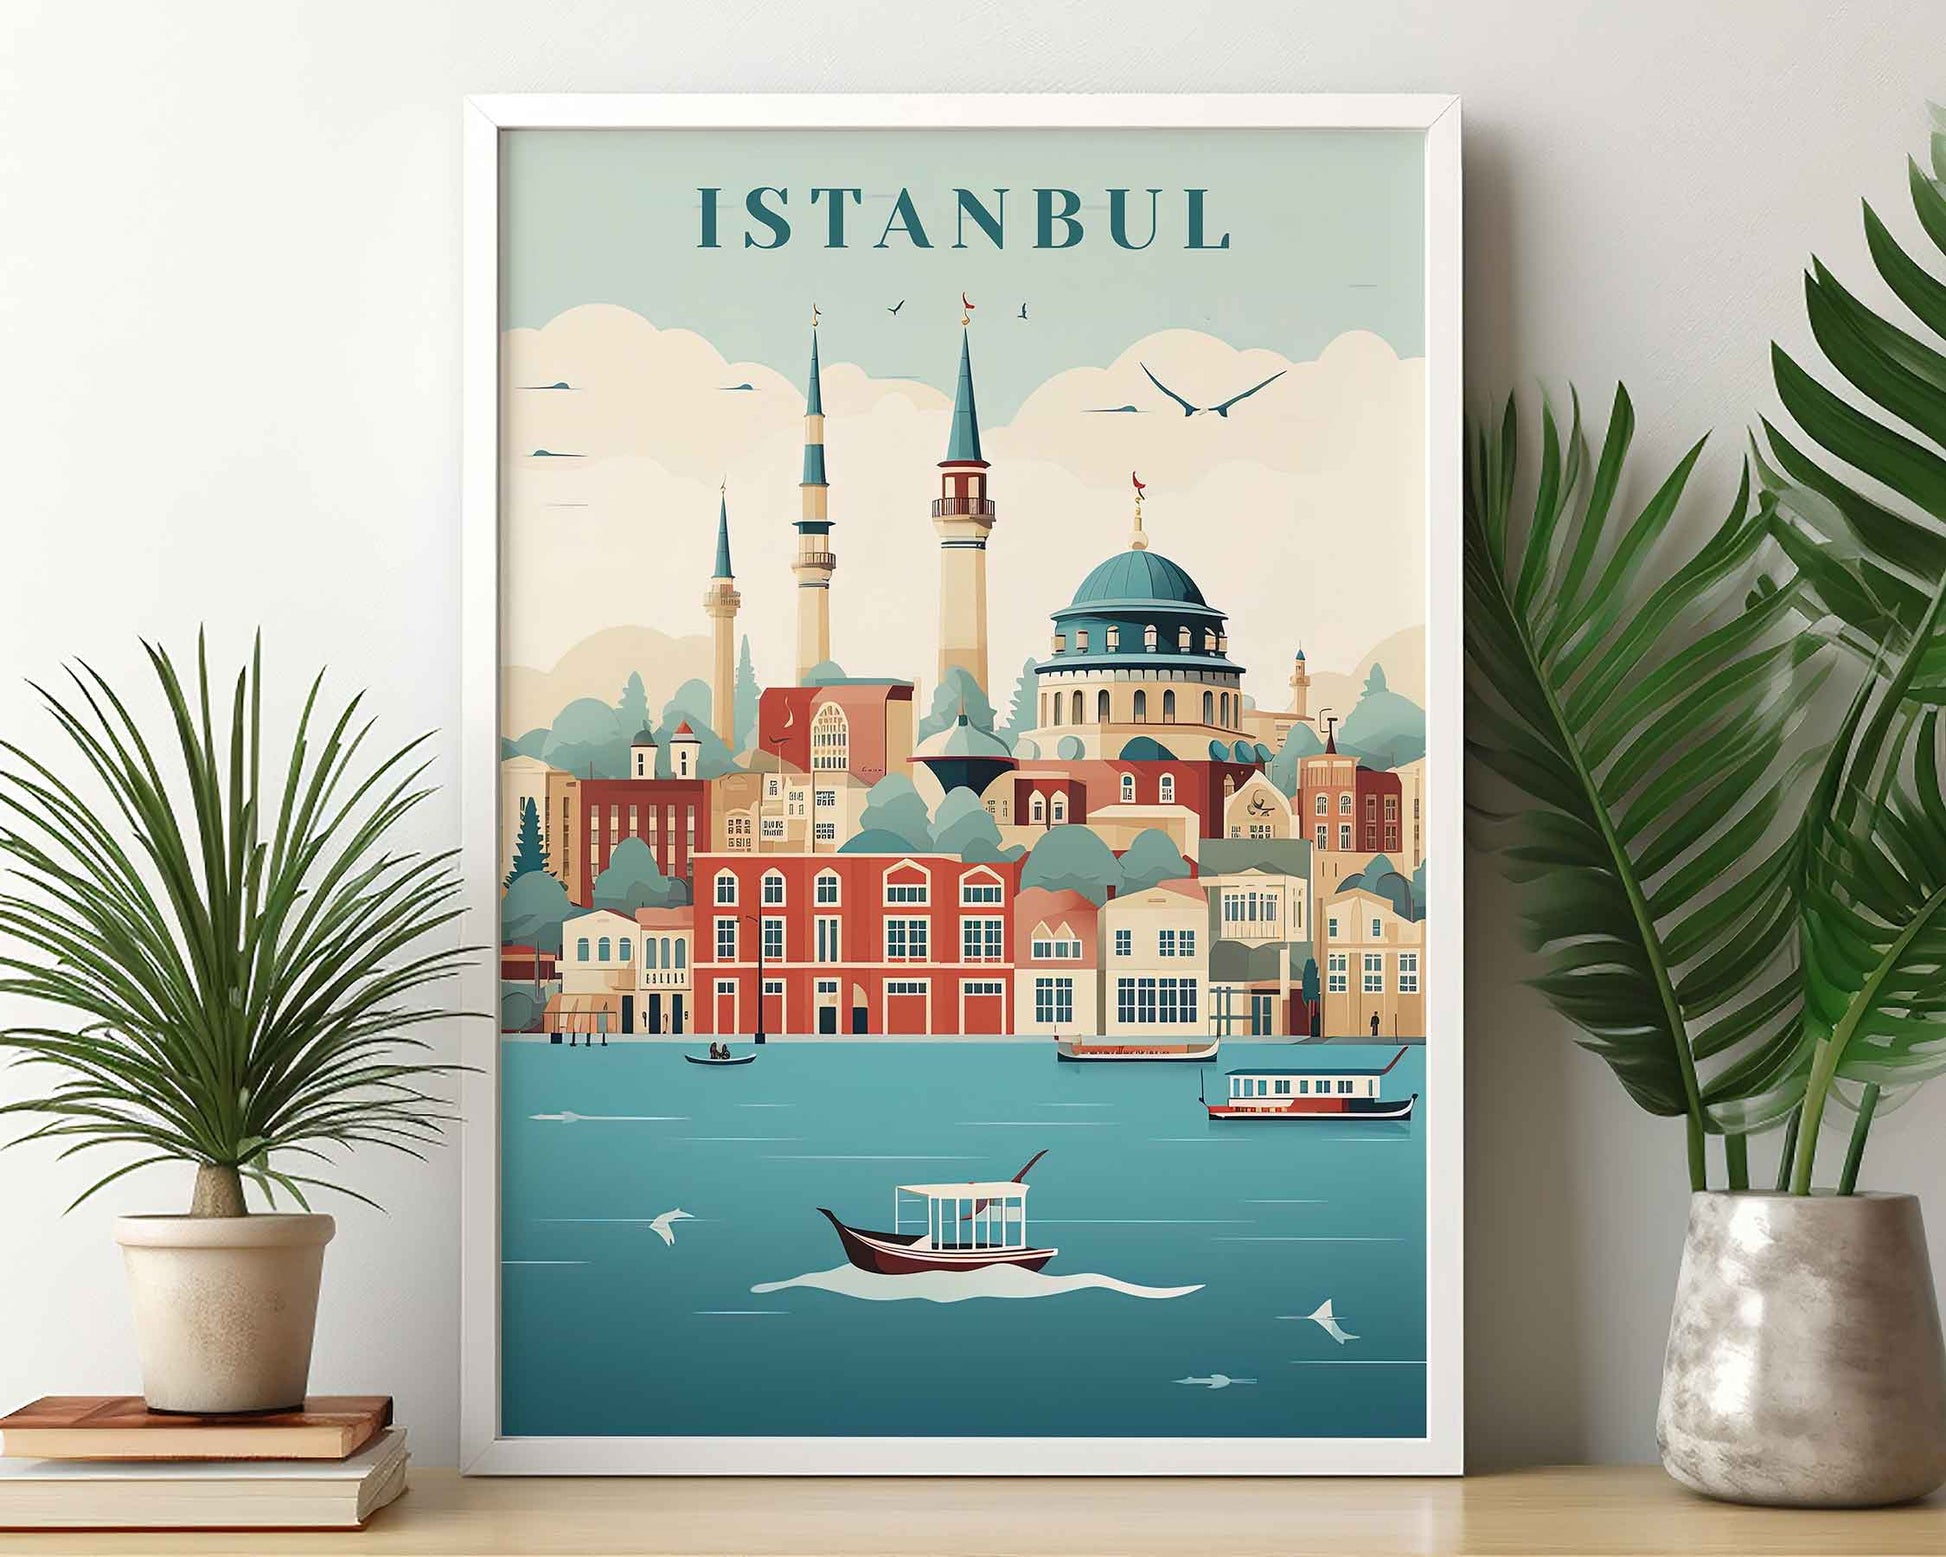 Framed Image of Istanbul Turkey Travel Poster Prints Illustration Wall Art